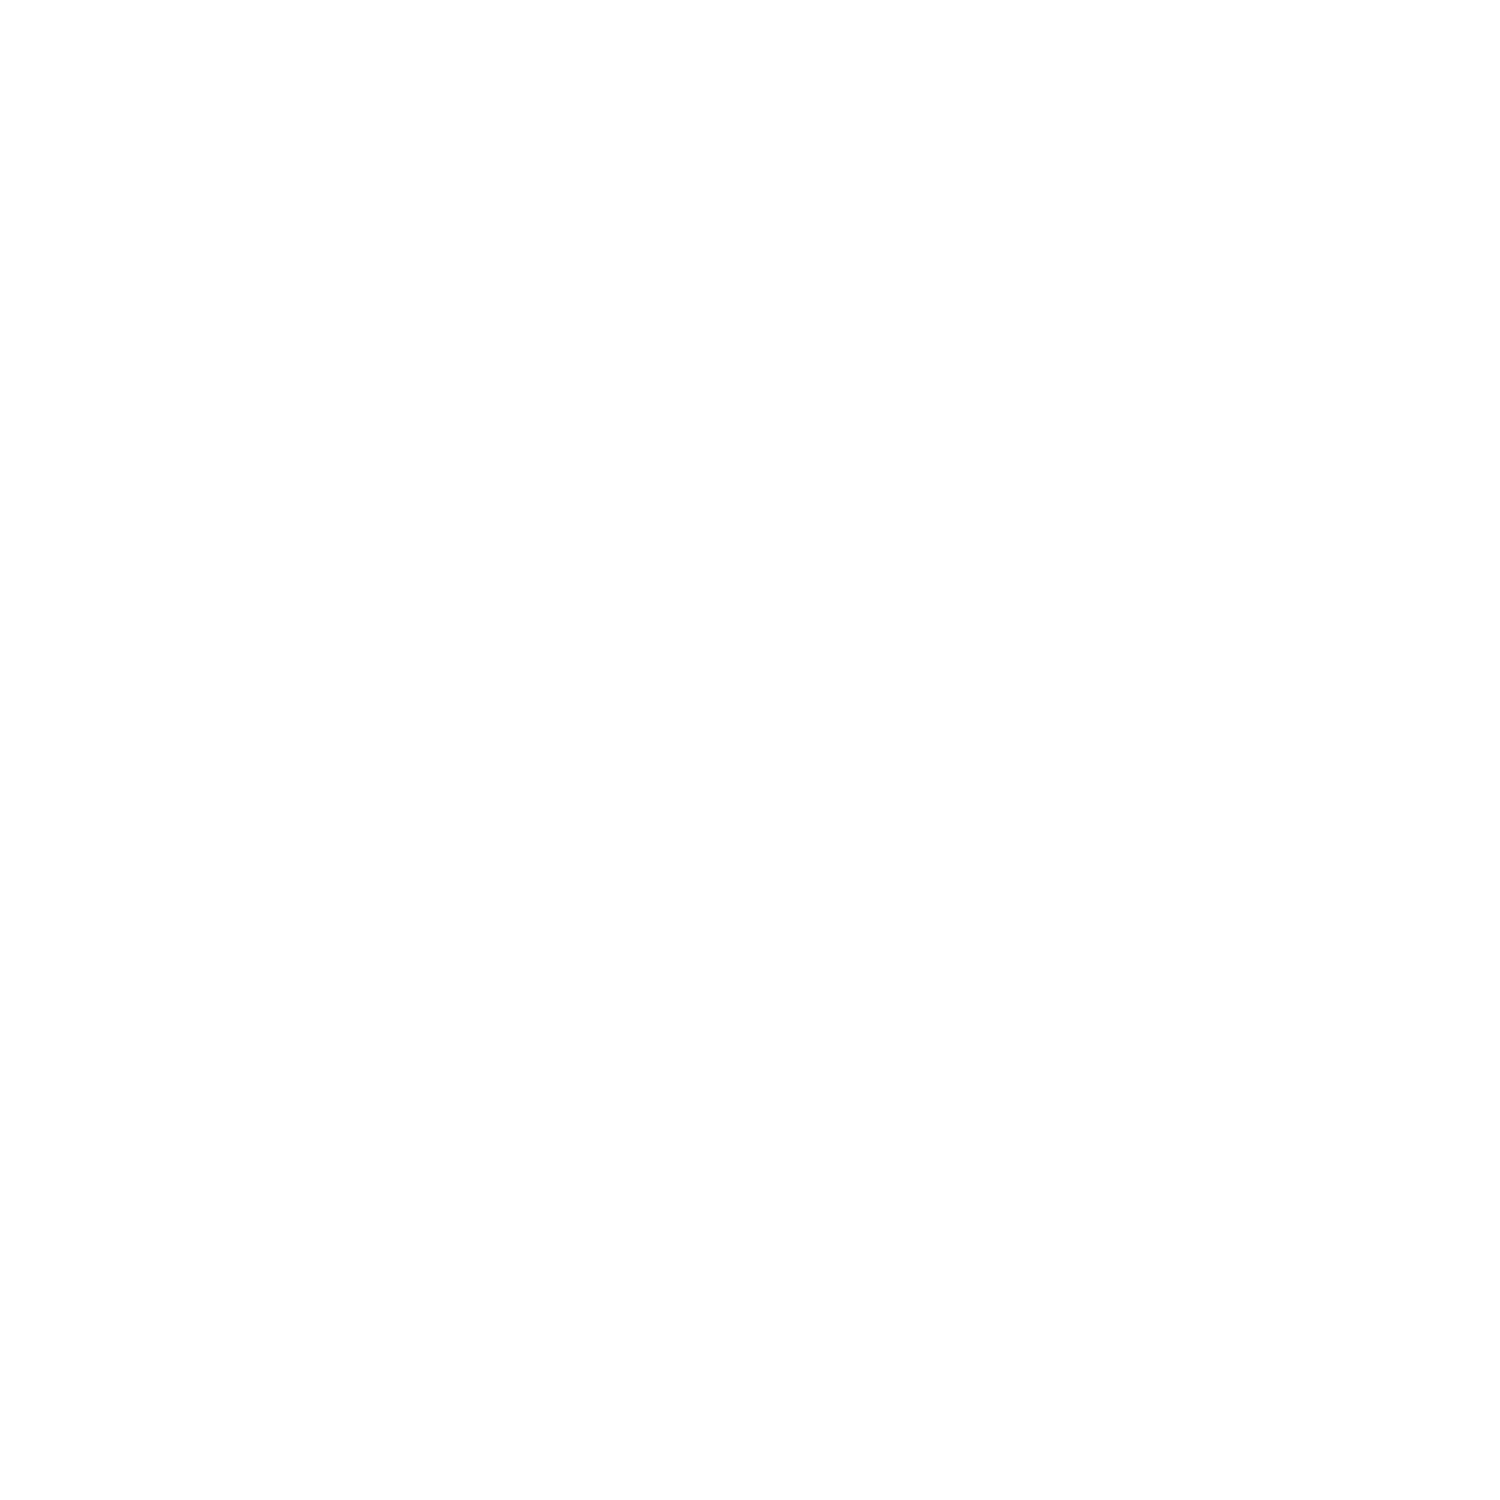 Yale International Relations Association